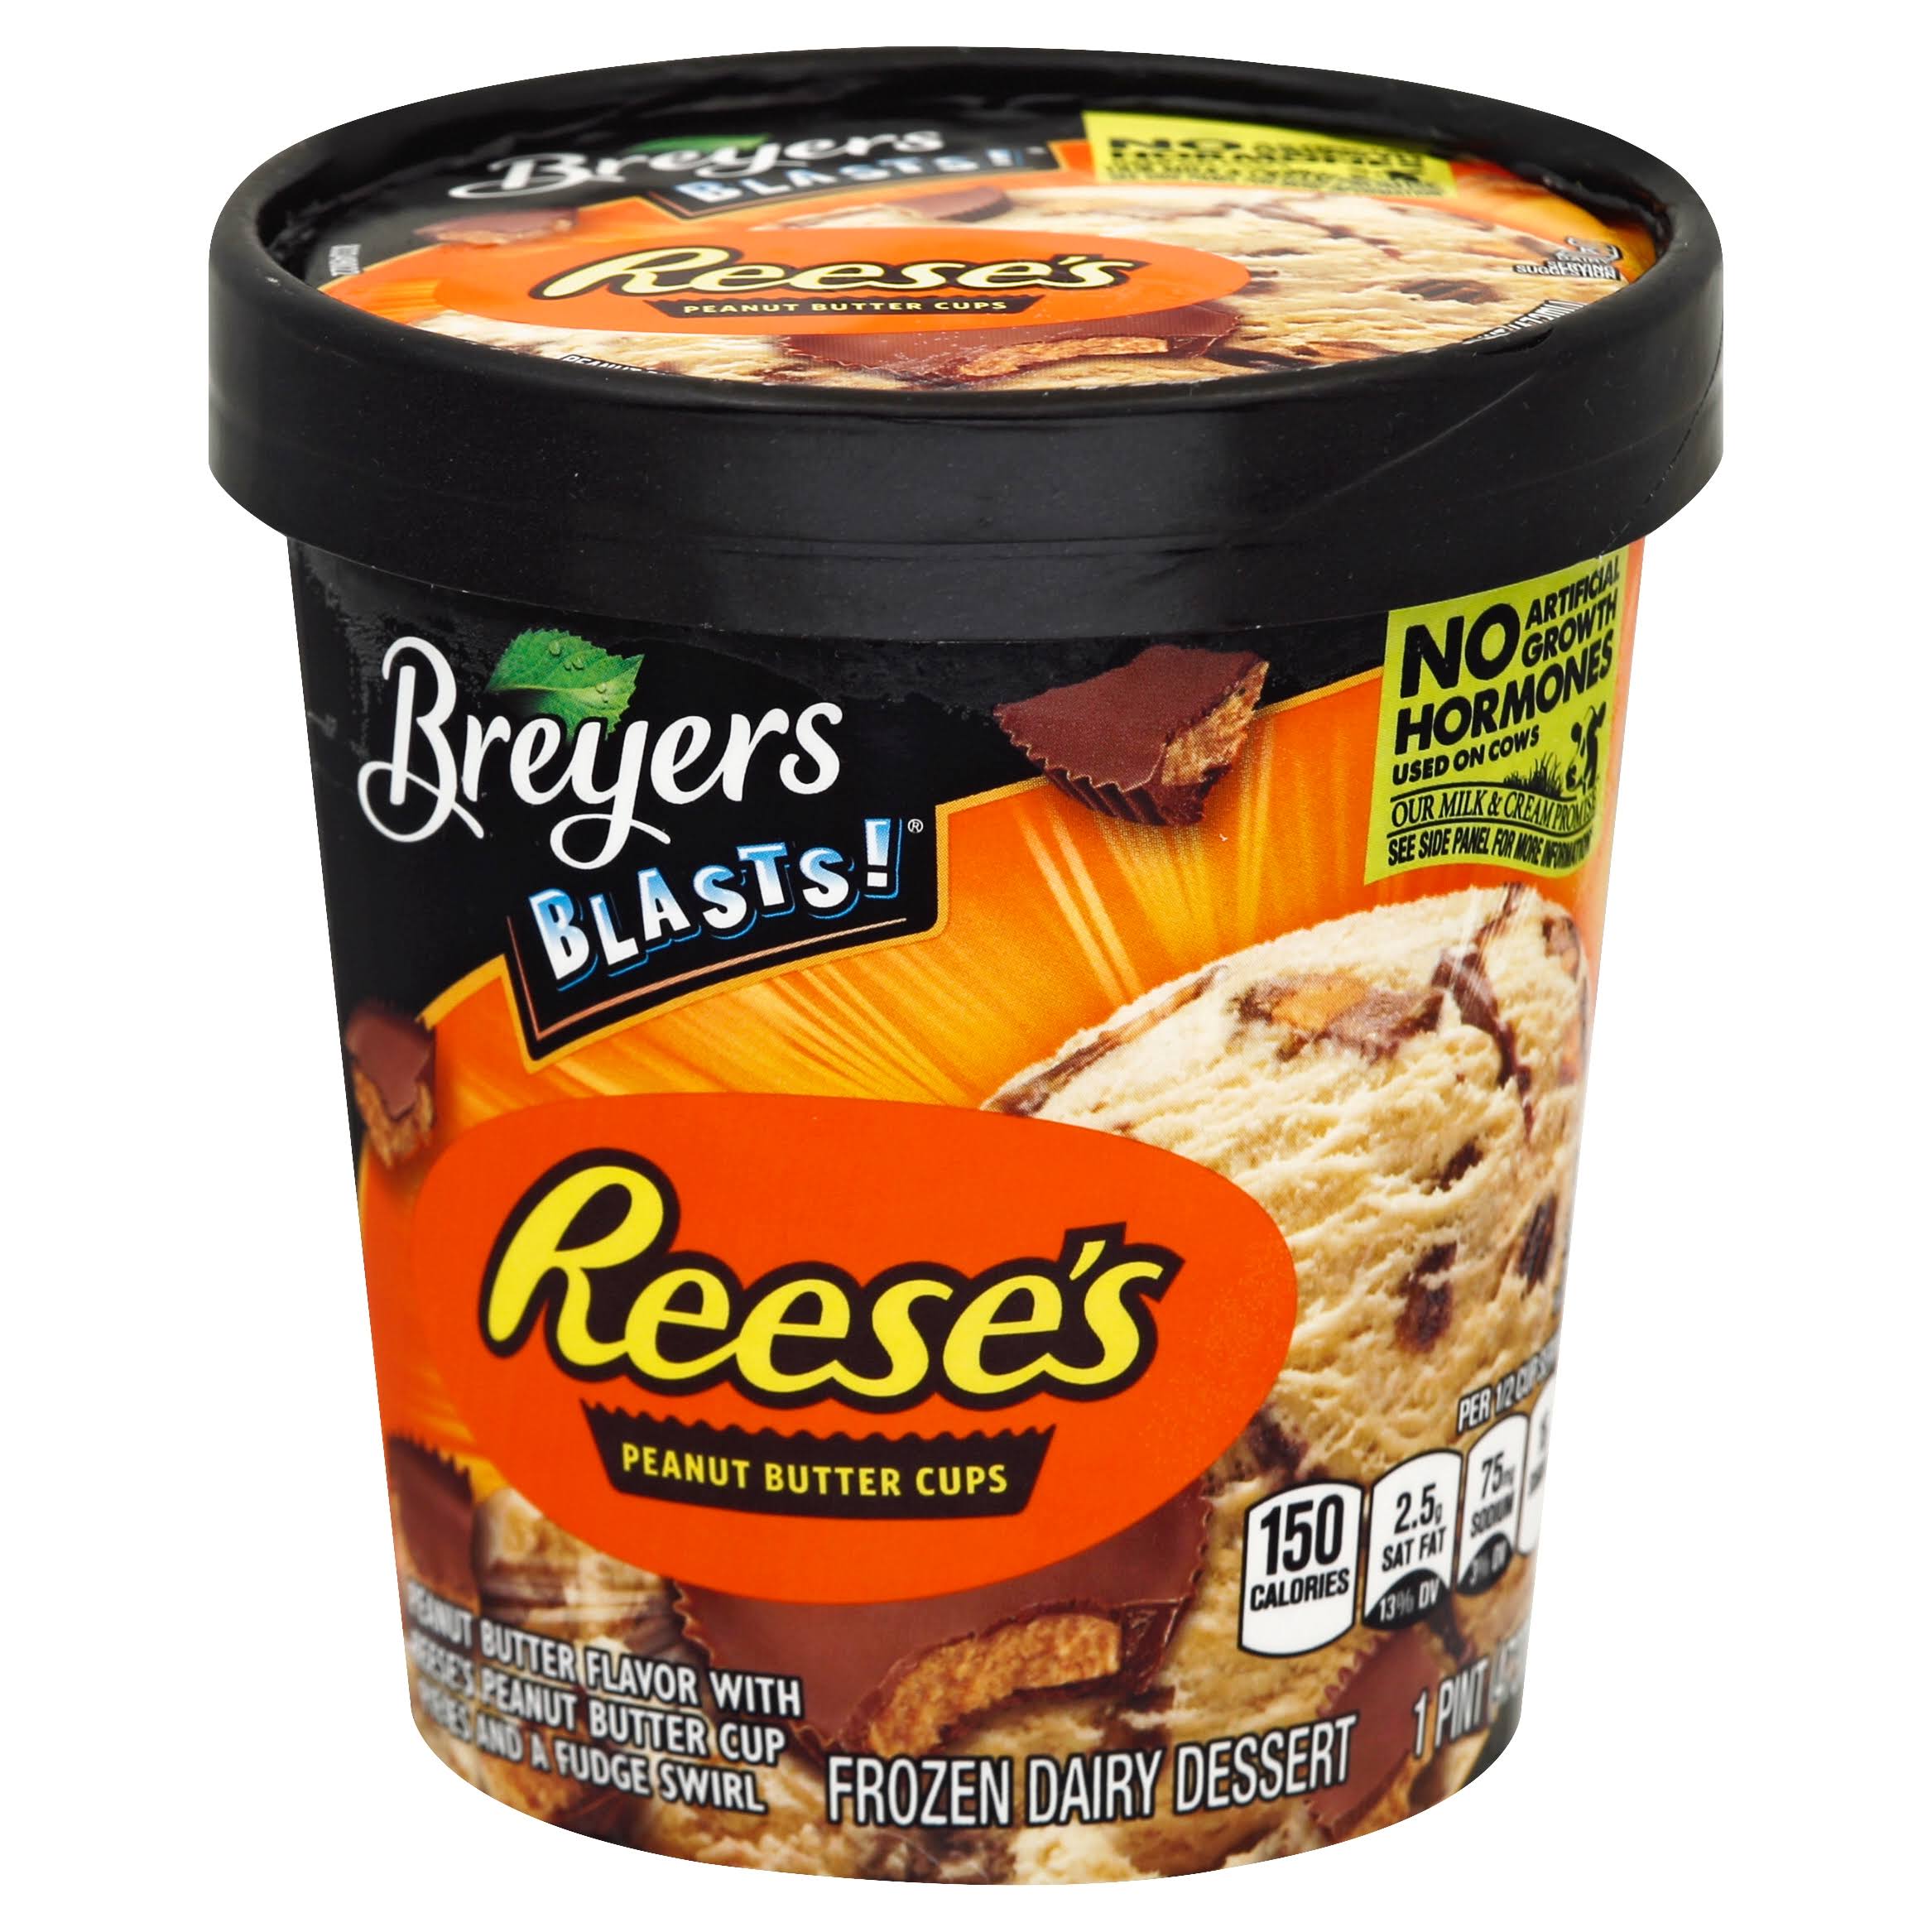 Breyers Blasts! Frozen Dairy Dessert, Reese’s Peanut Butter Cups - 1 pint